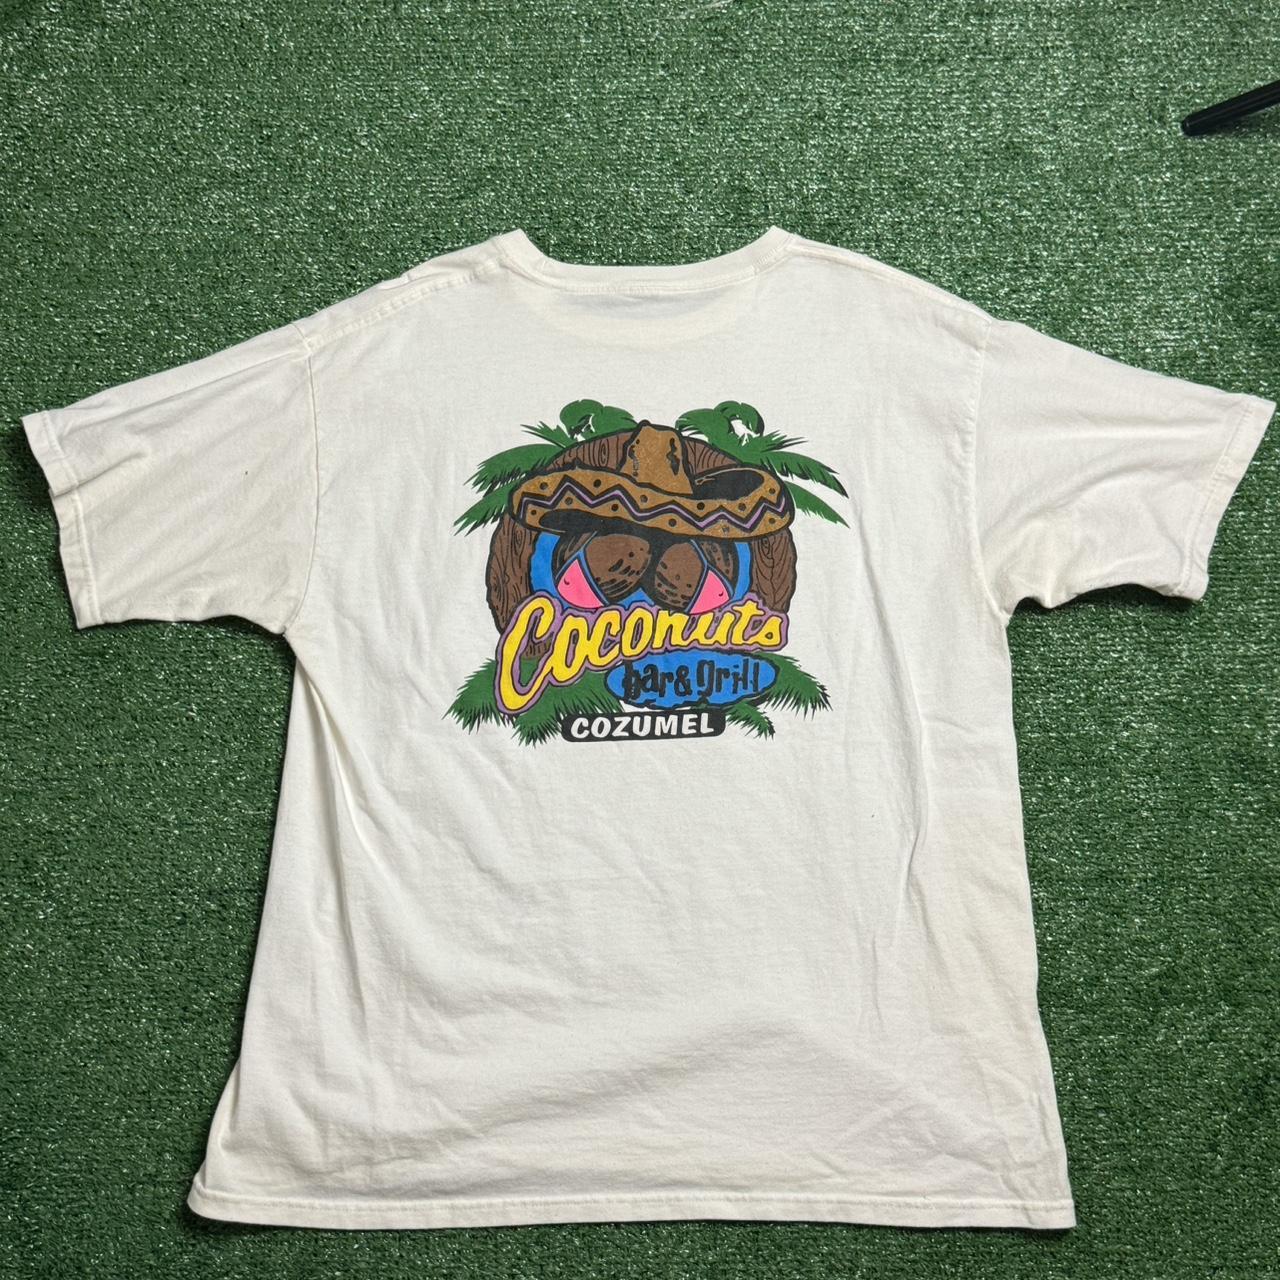 Vintage 90s Cozumel Mexico white tee shirt - Depop